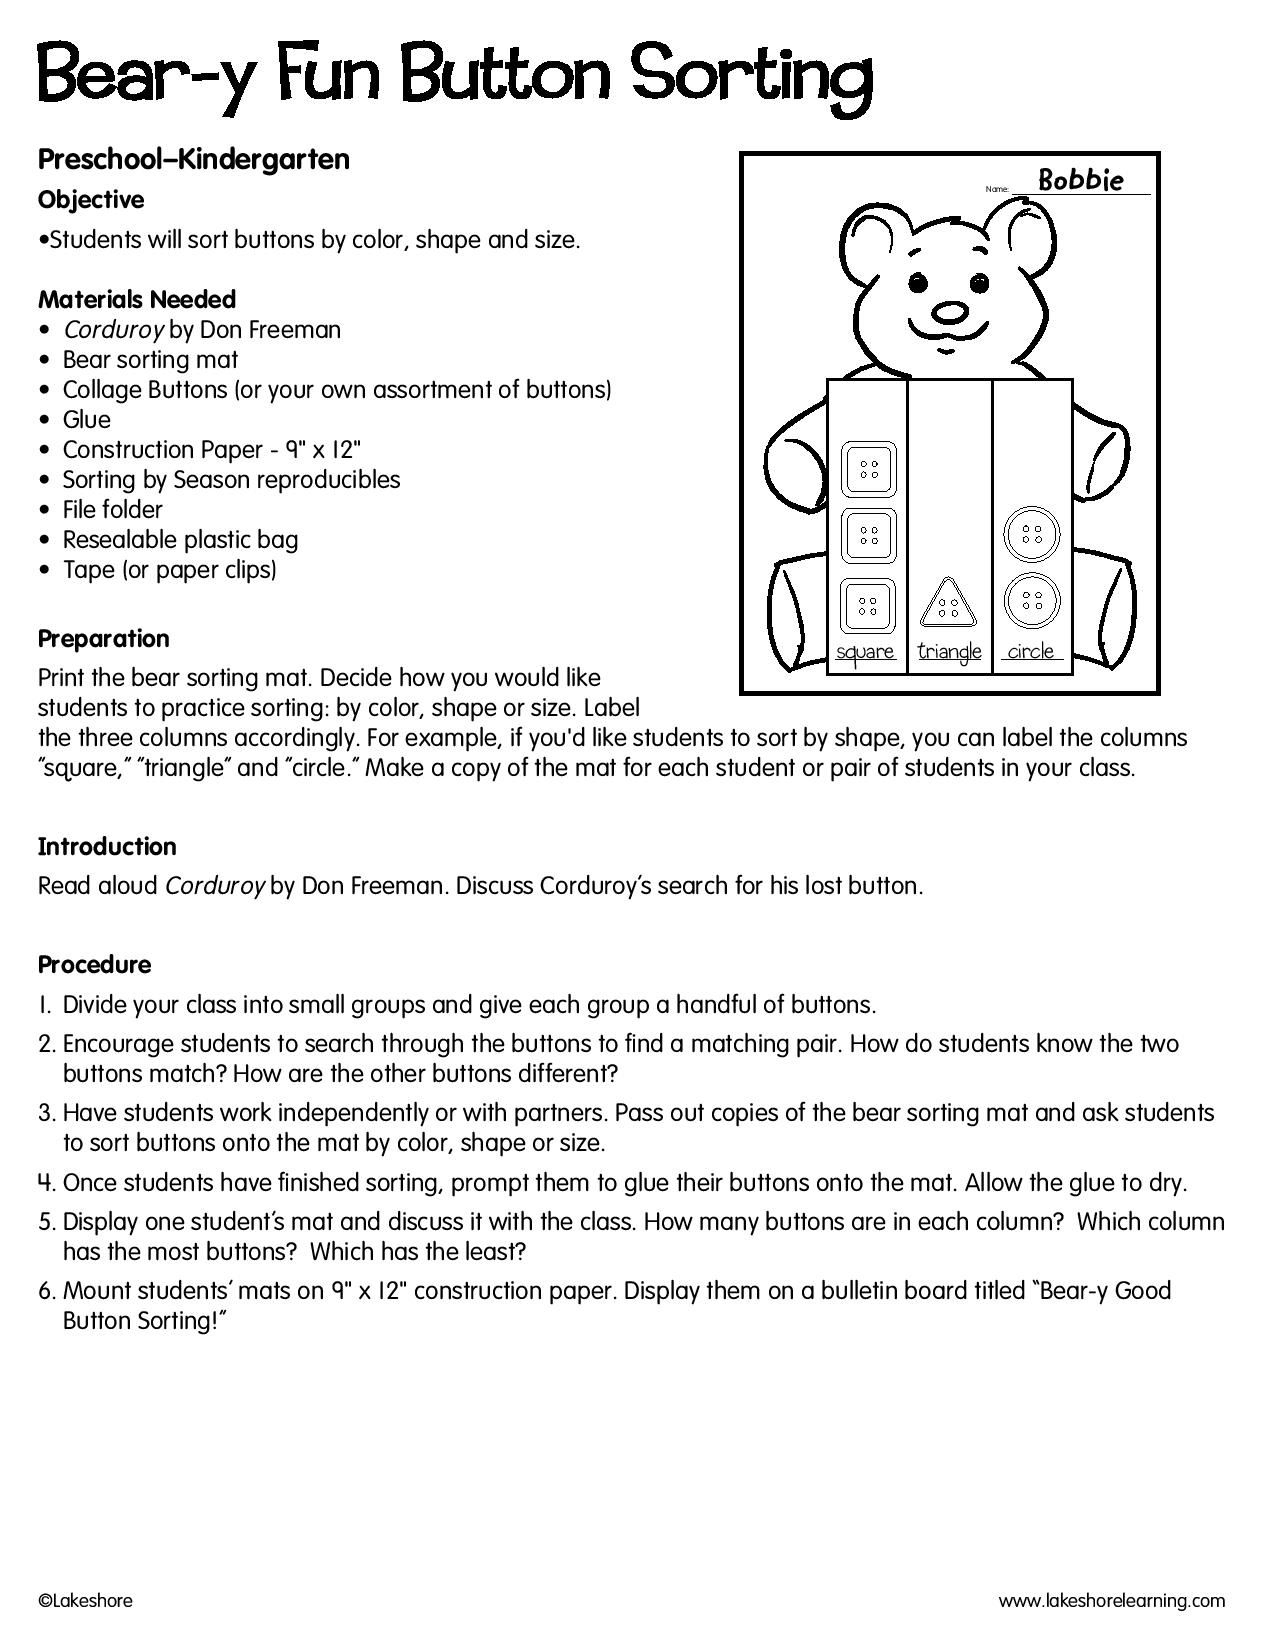 Bear-Y Fun Button Sorting #lessonplan | Free Lesson Plans